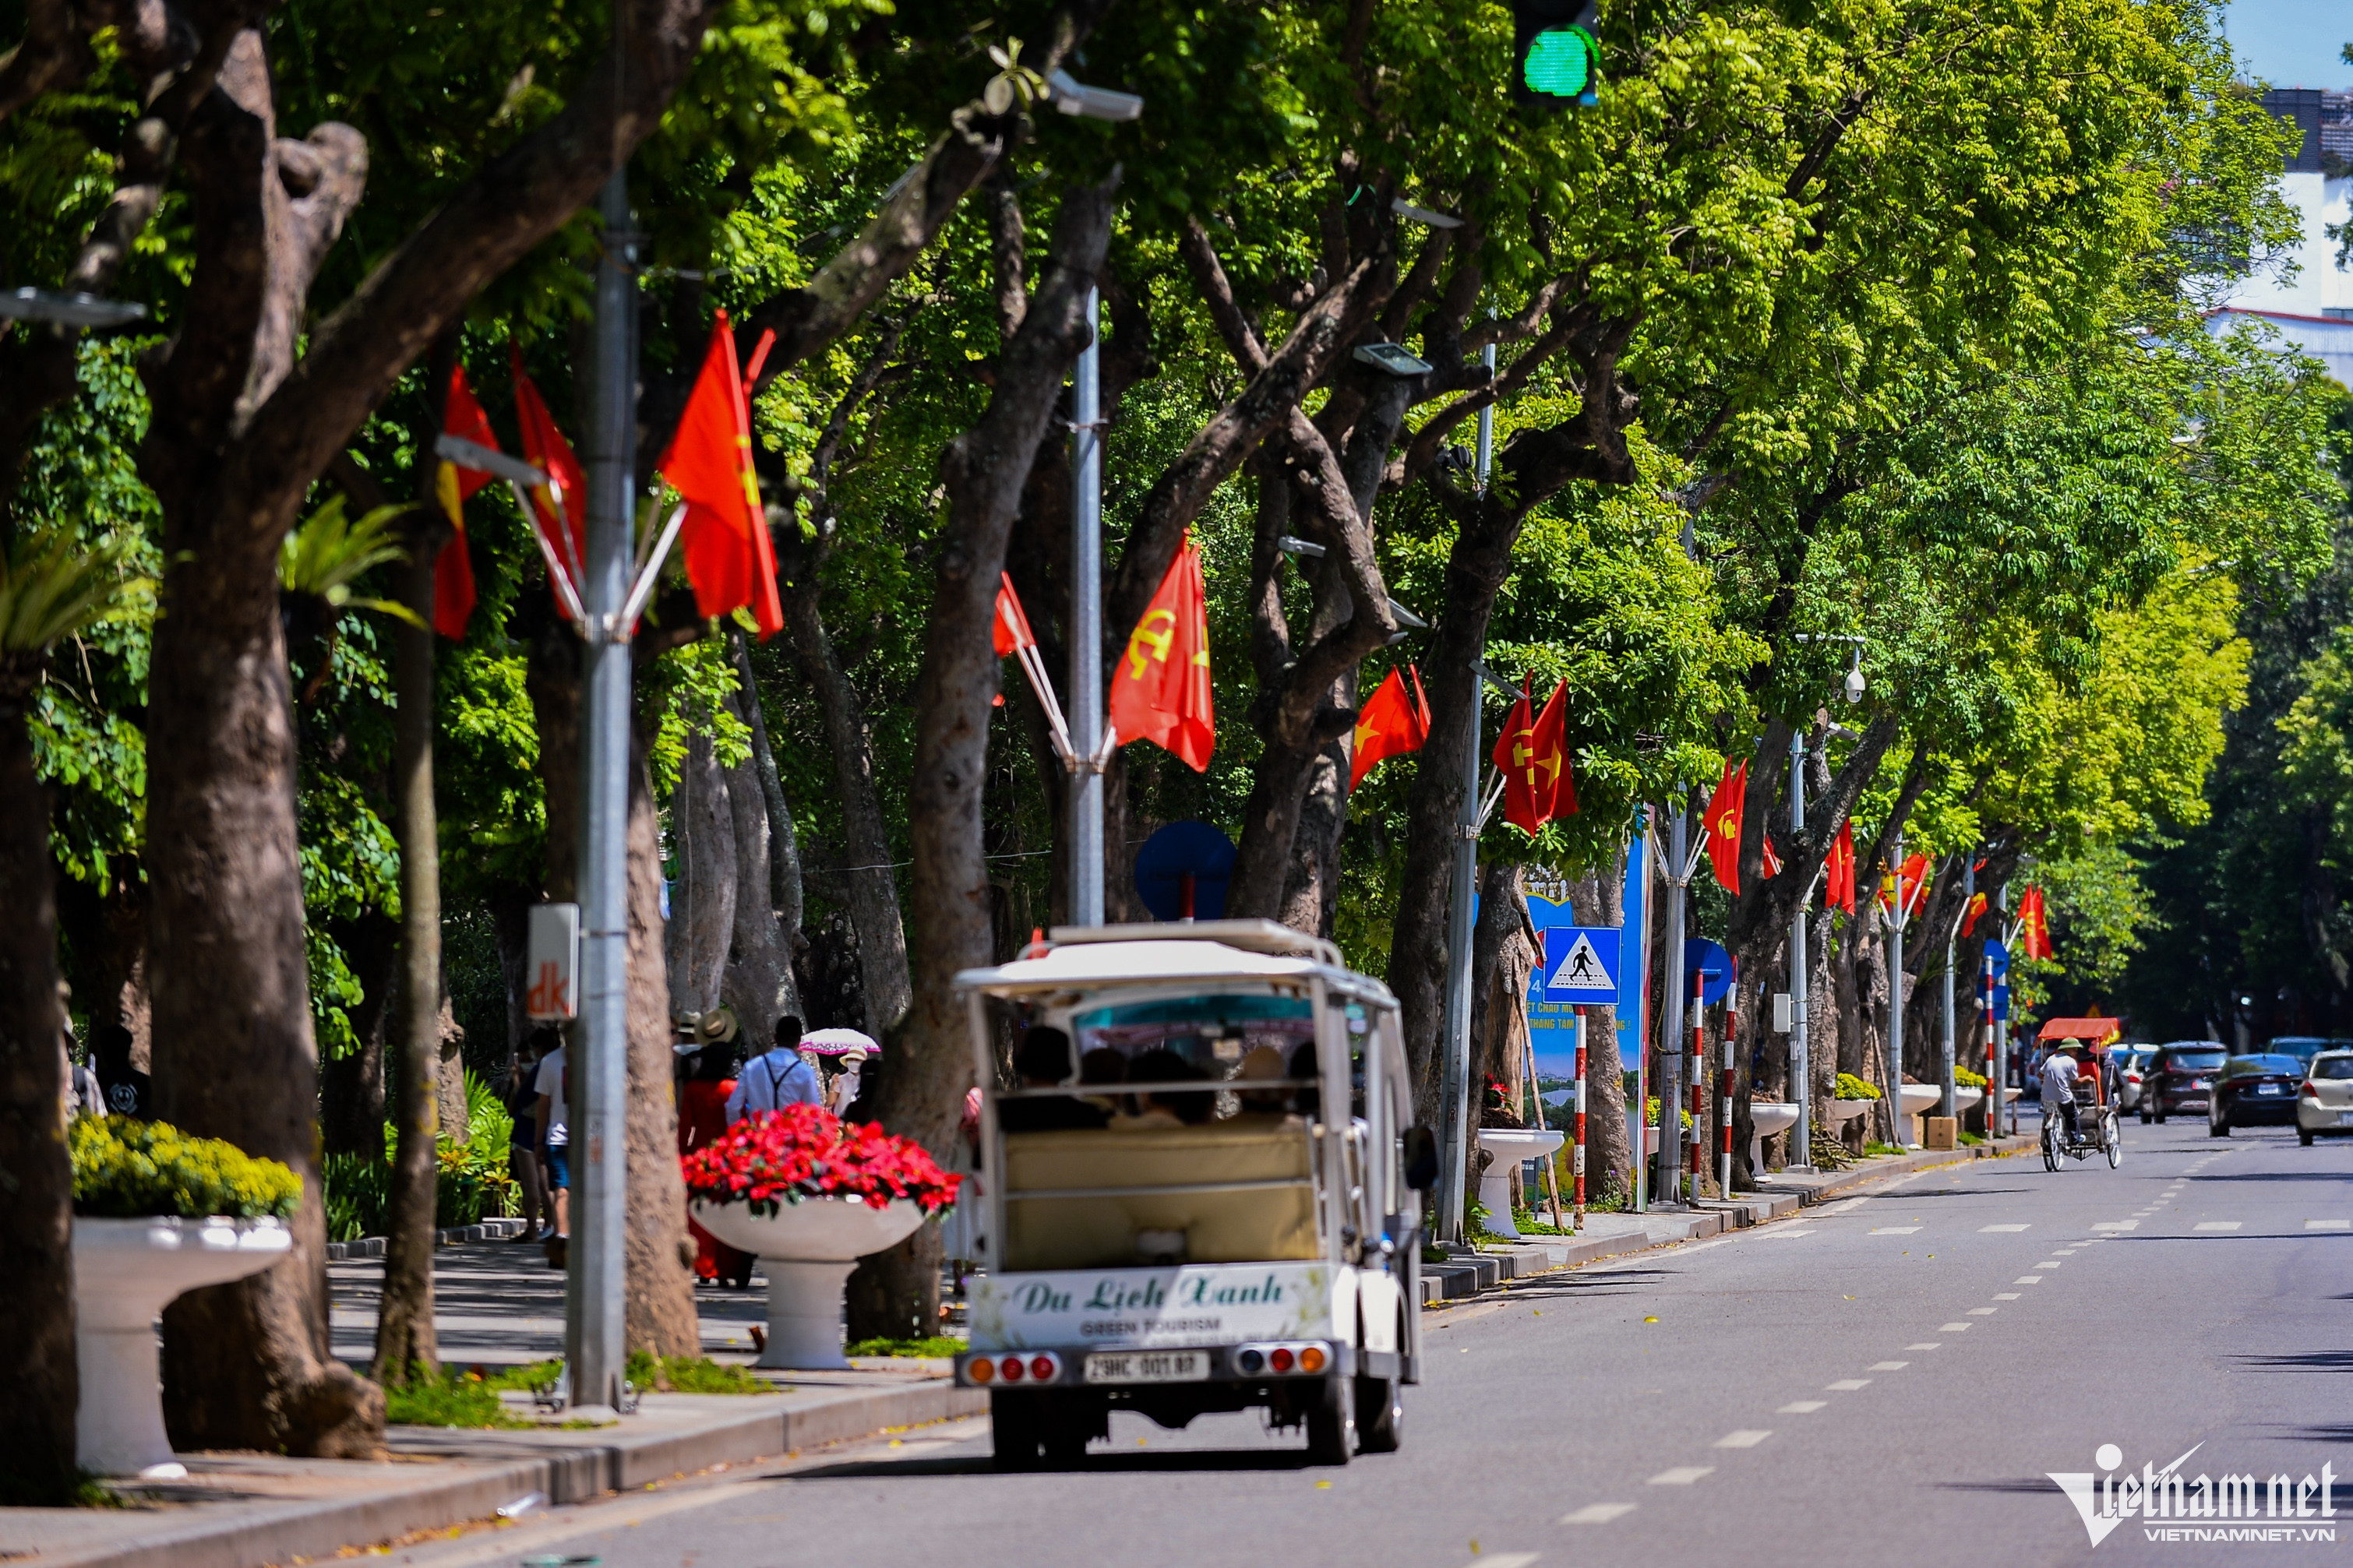 Vietnam is a rising star in Asia: professor